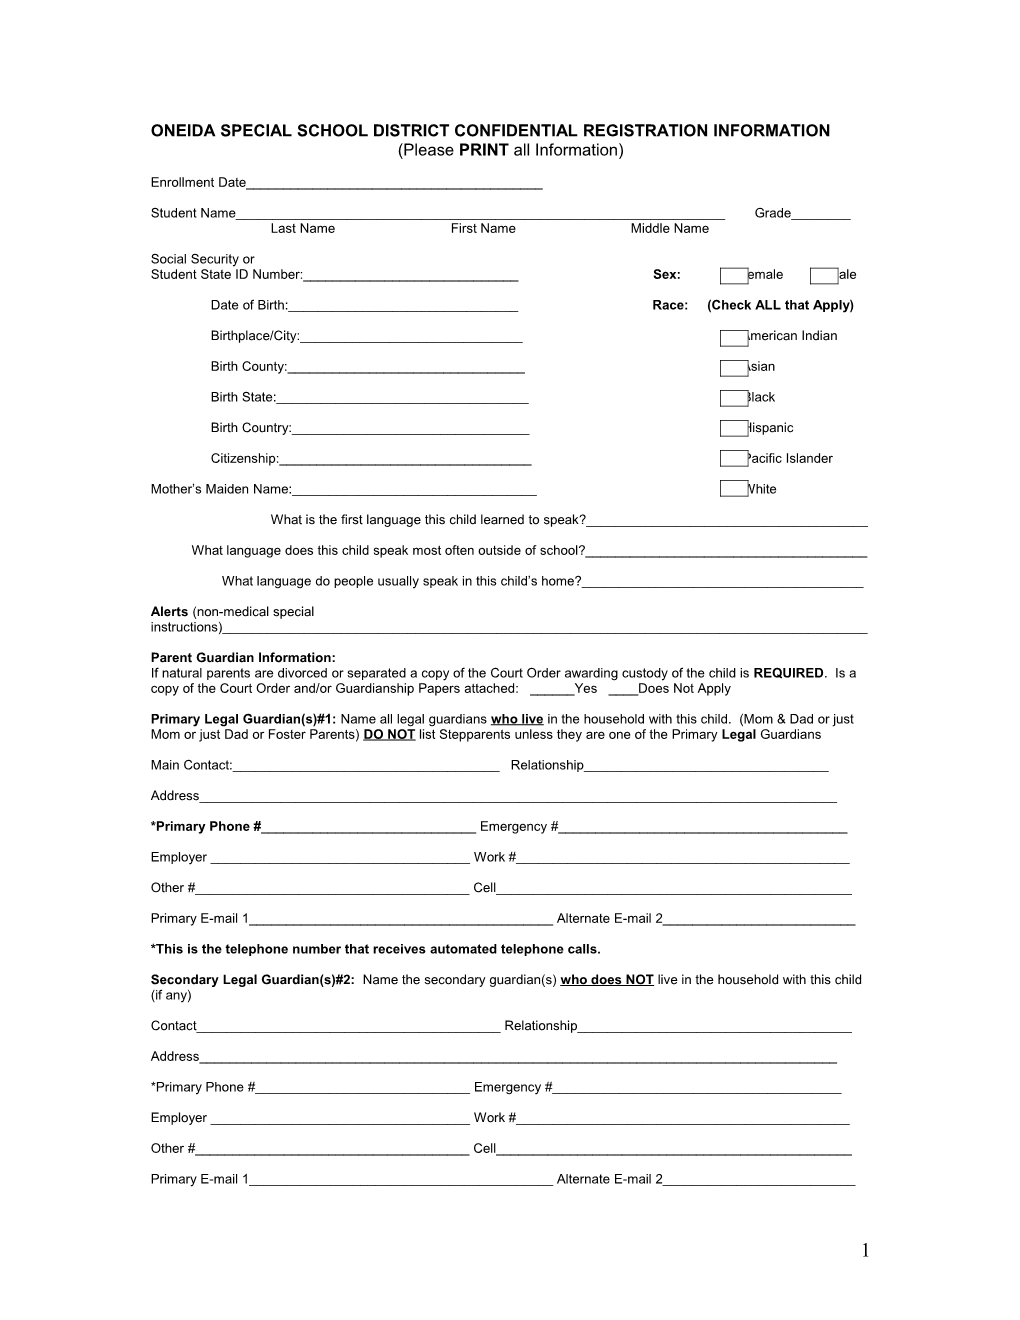 Oneida Special School District Confidential Registration Information